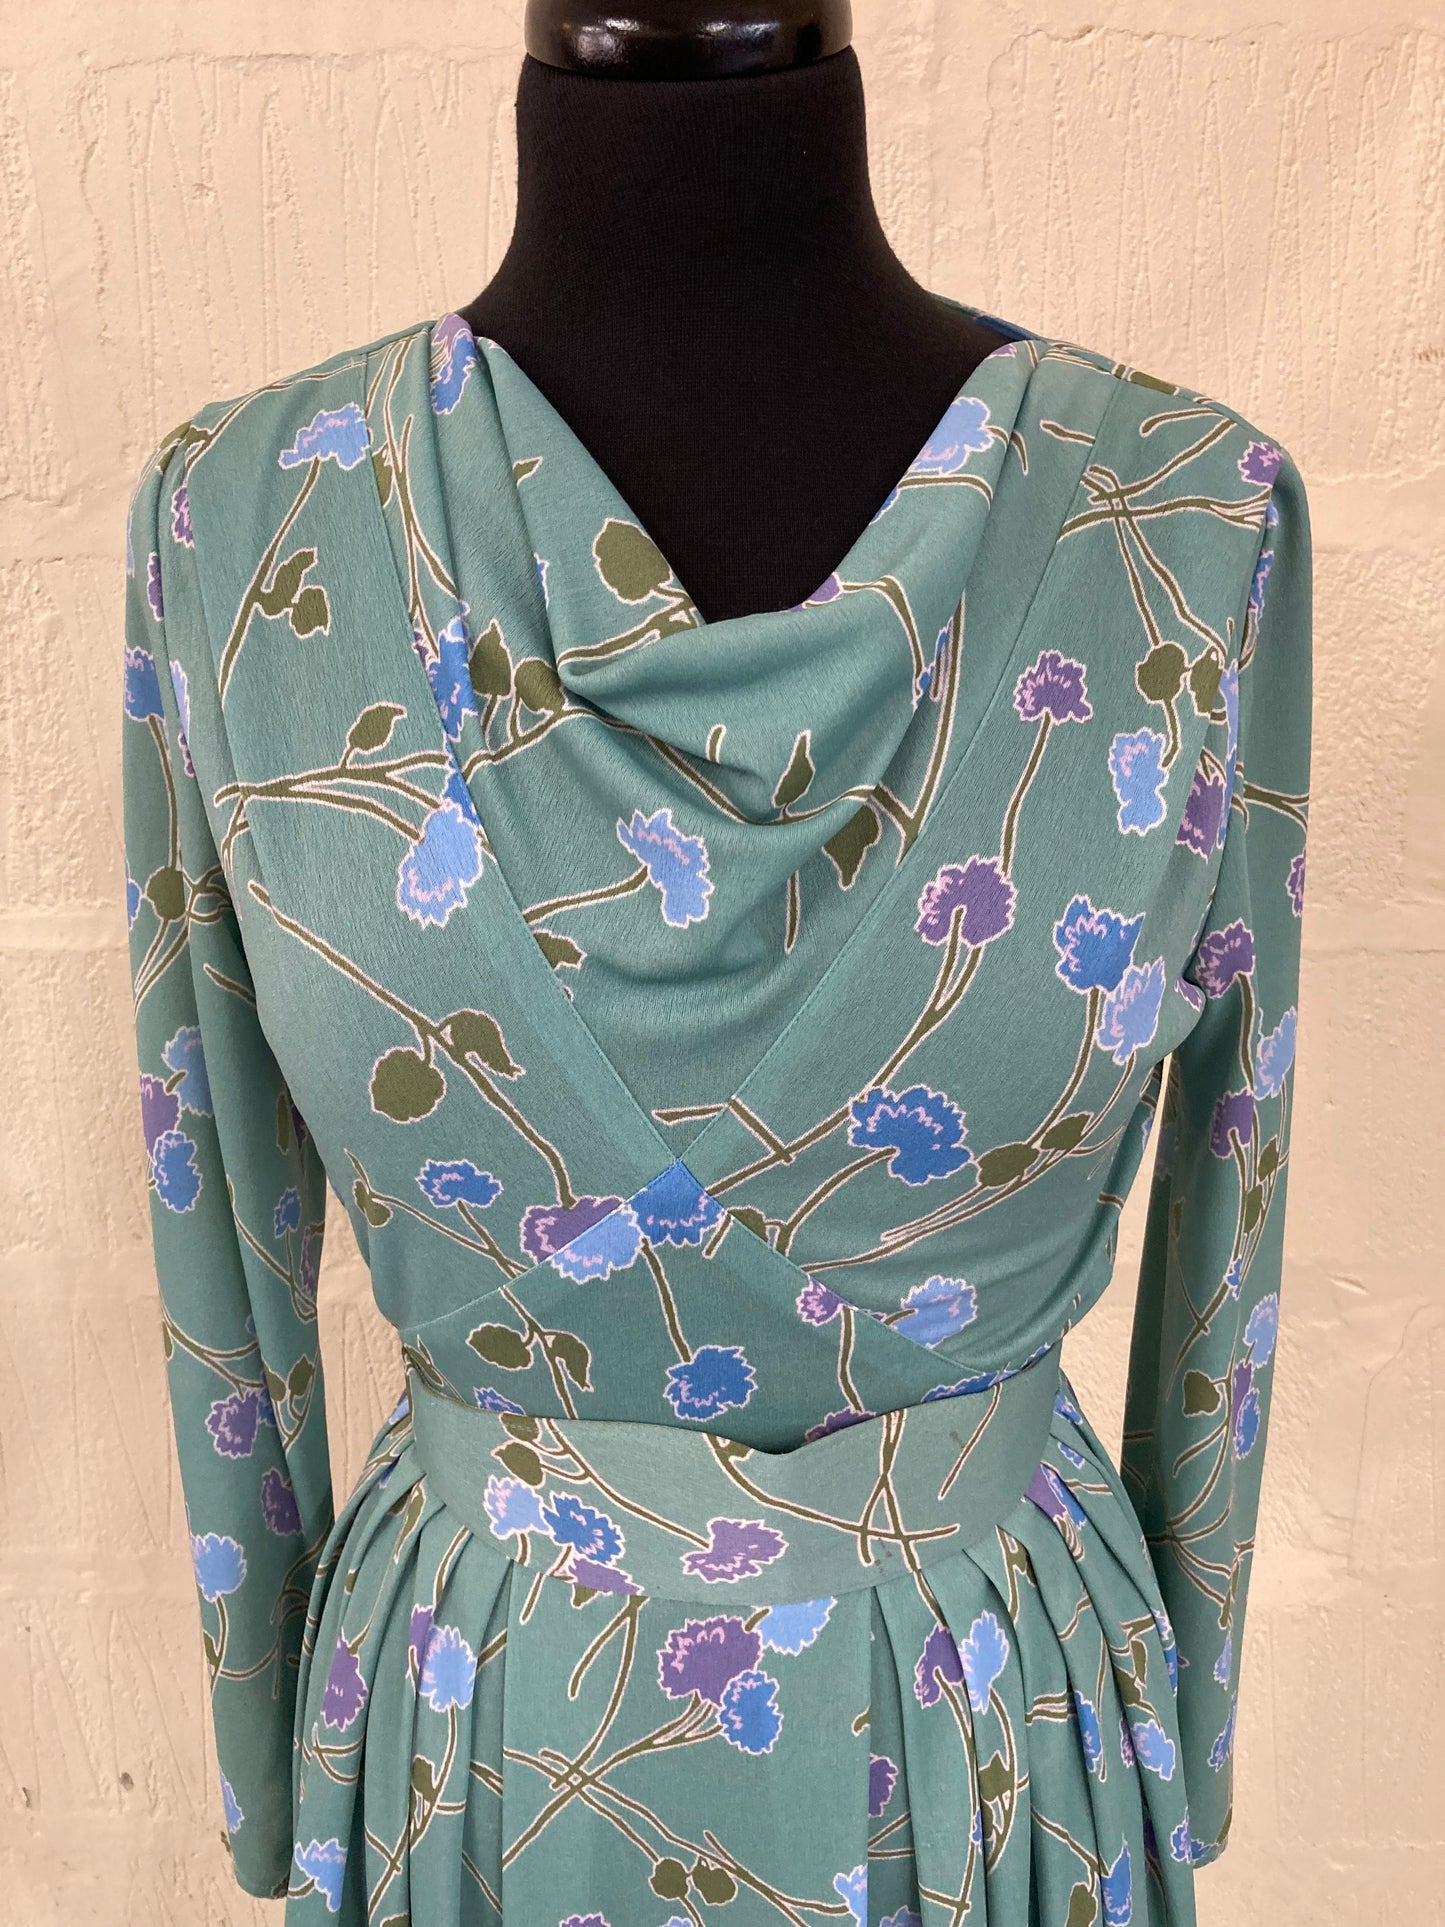 Vintage Gold Label by Tricoville Mint Green Floral Dress Size 10